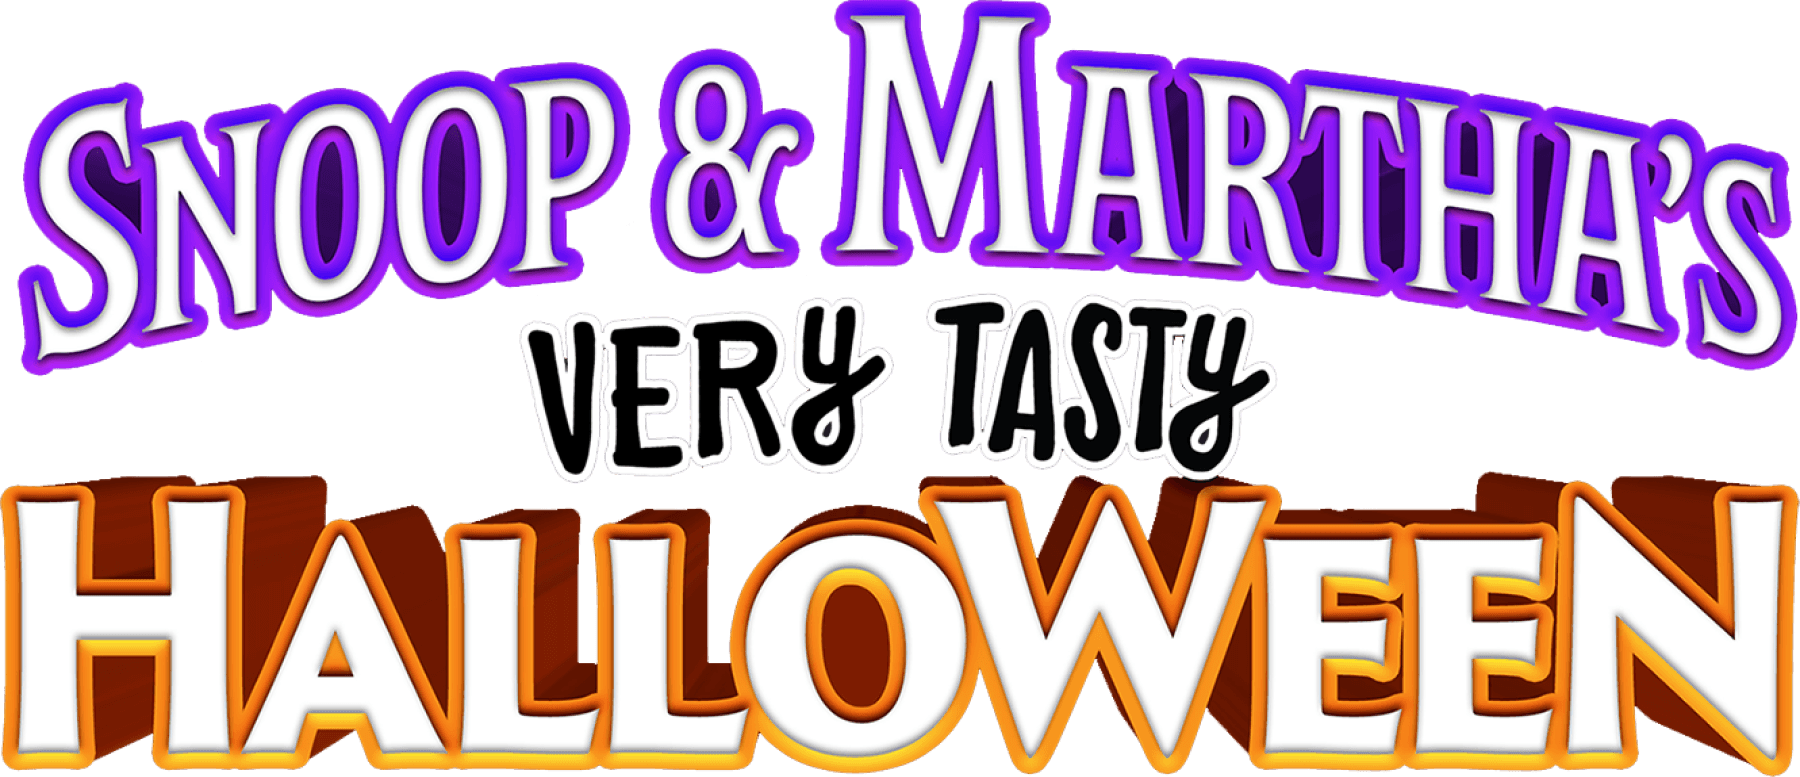 Snoop & Martha's Very Tasty Halloween logo